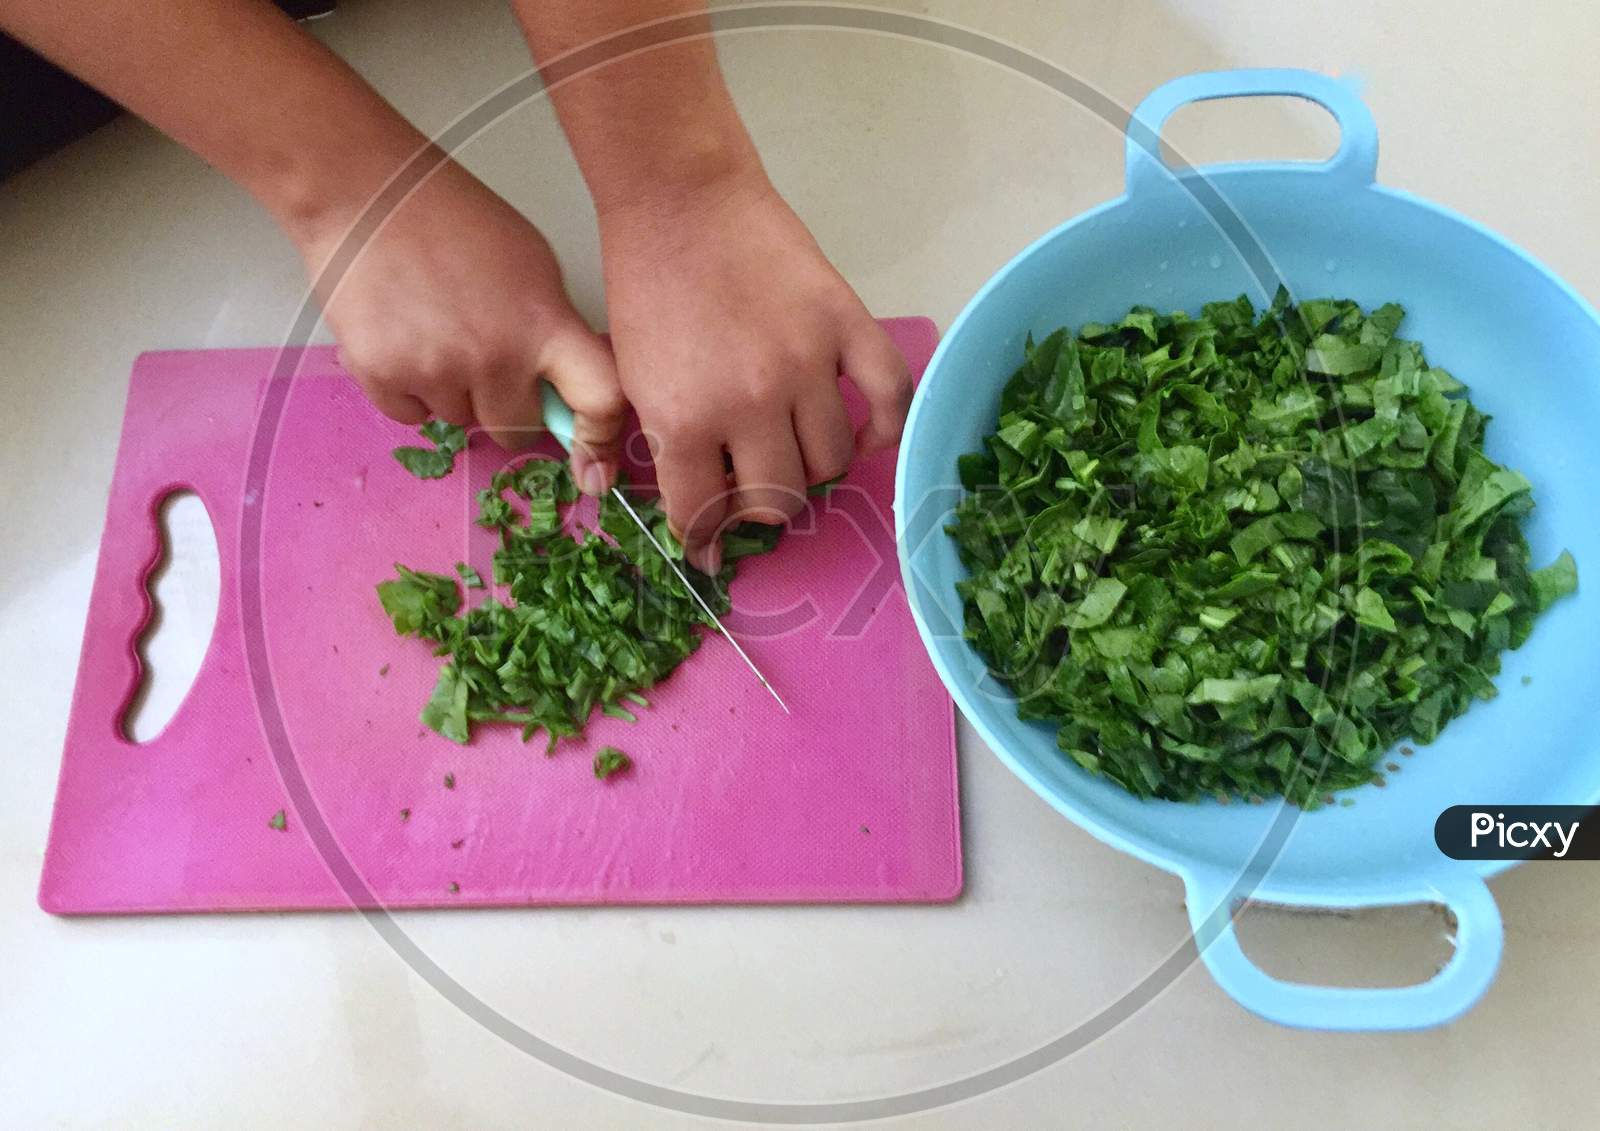 Woman cutting fresh vegetables chopping board on kitchen